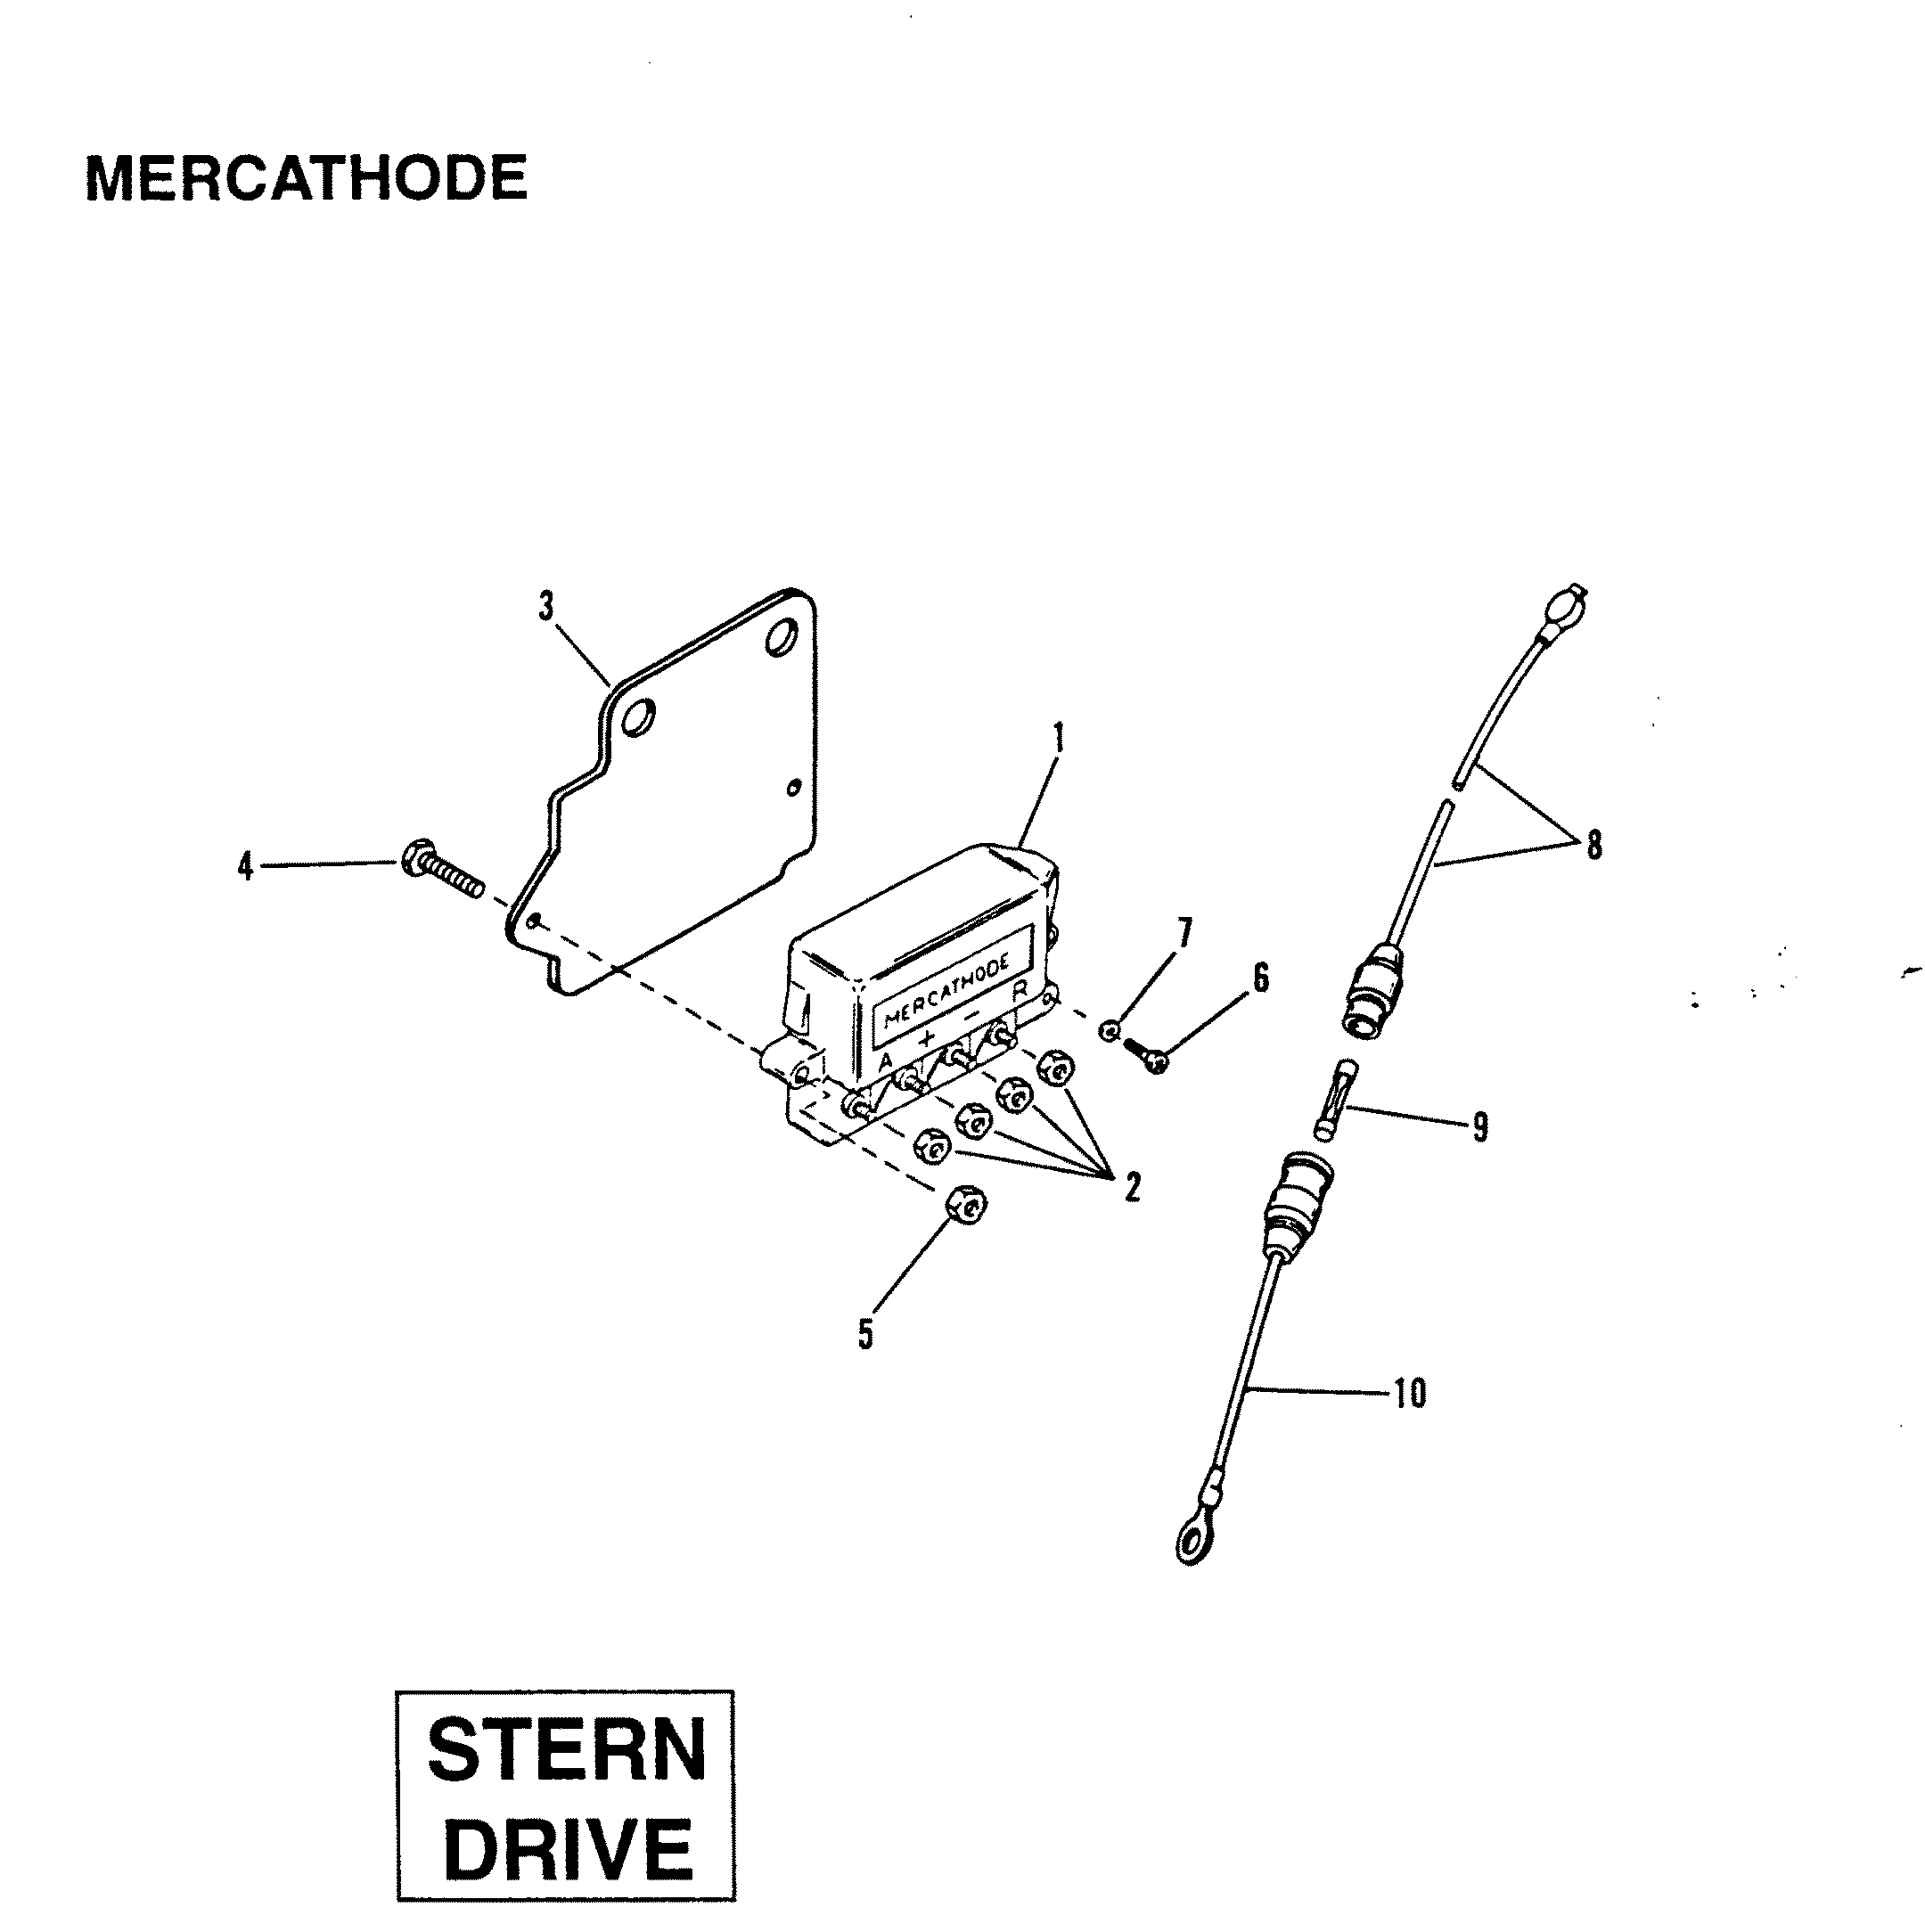 MERCATHODE (STERN DRIVE)